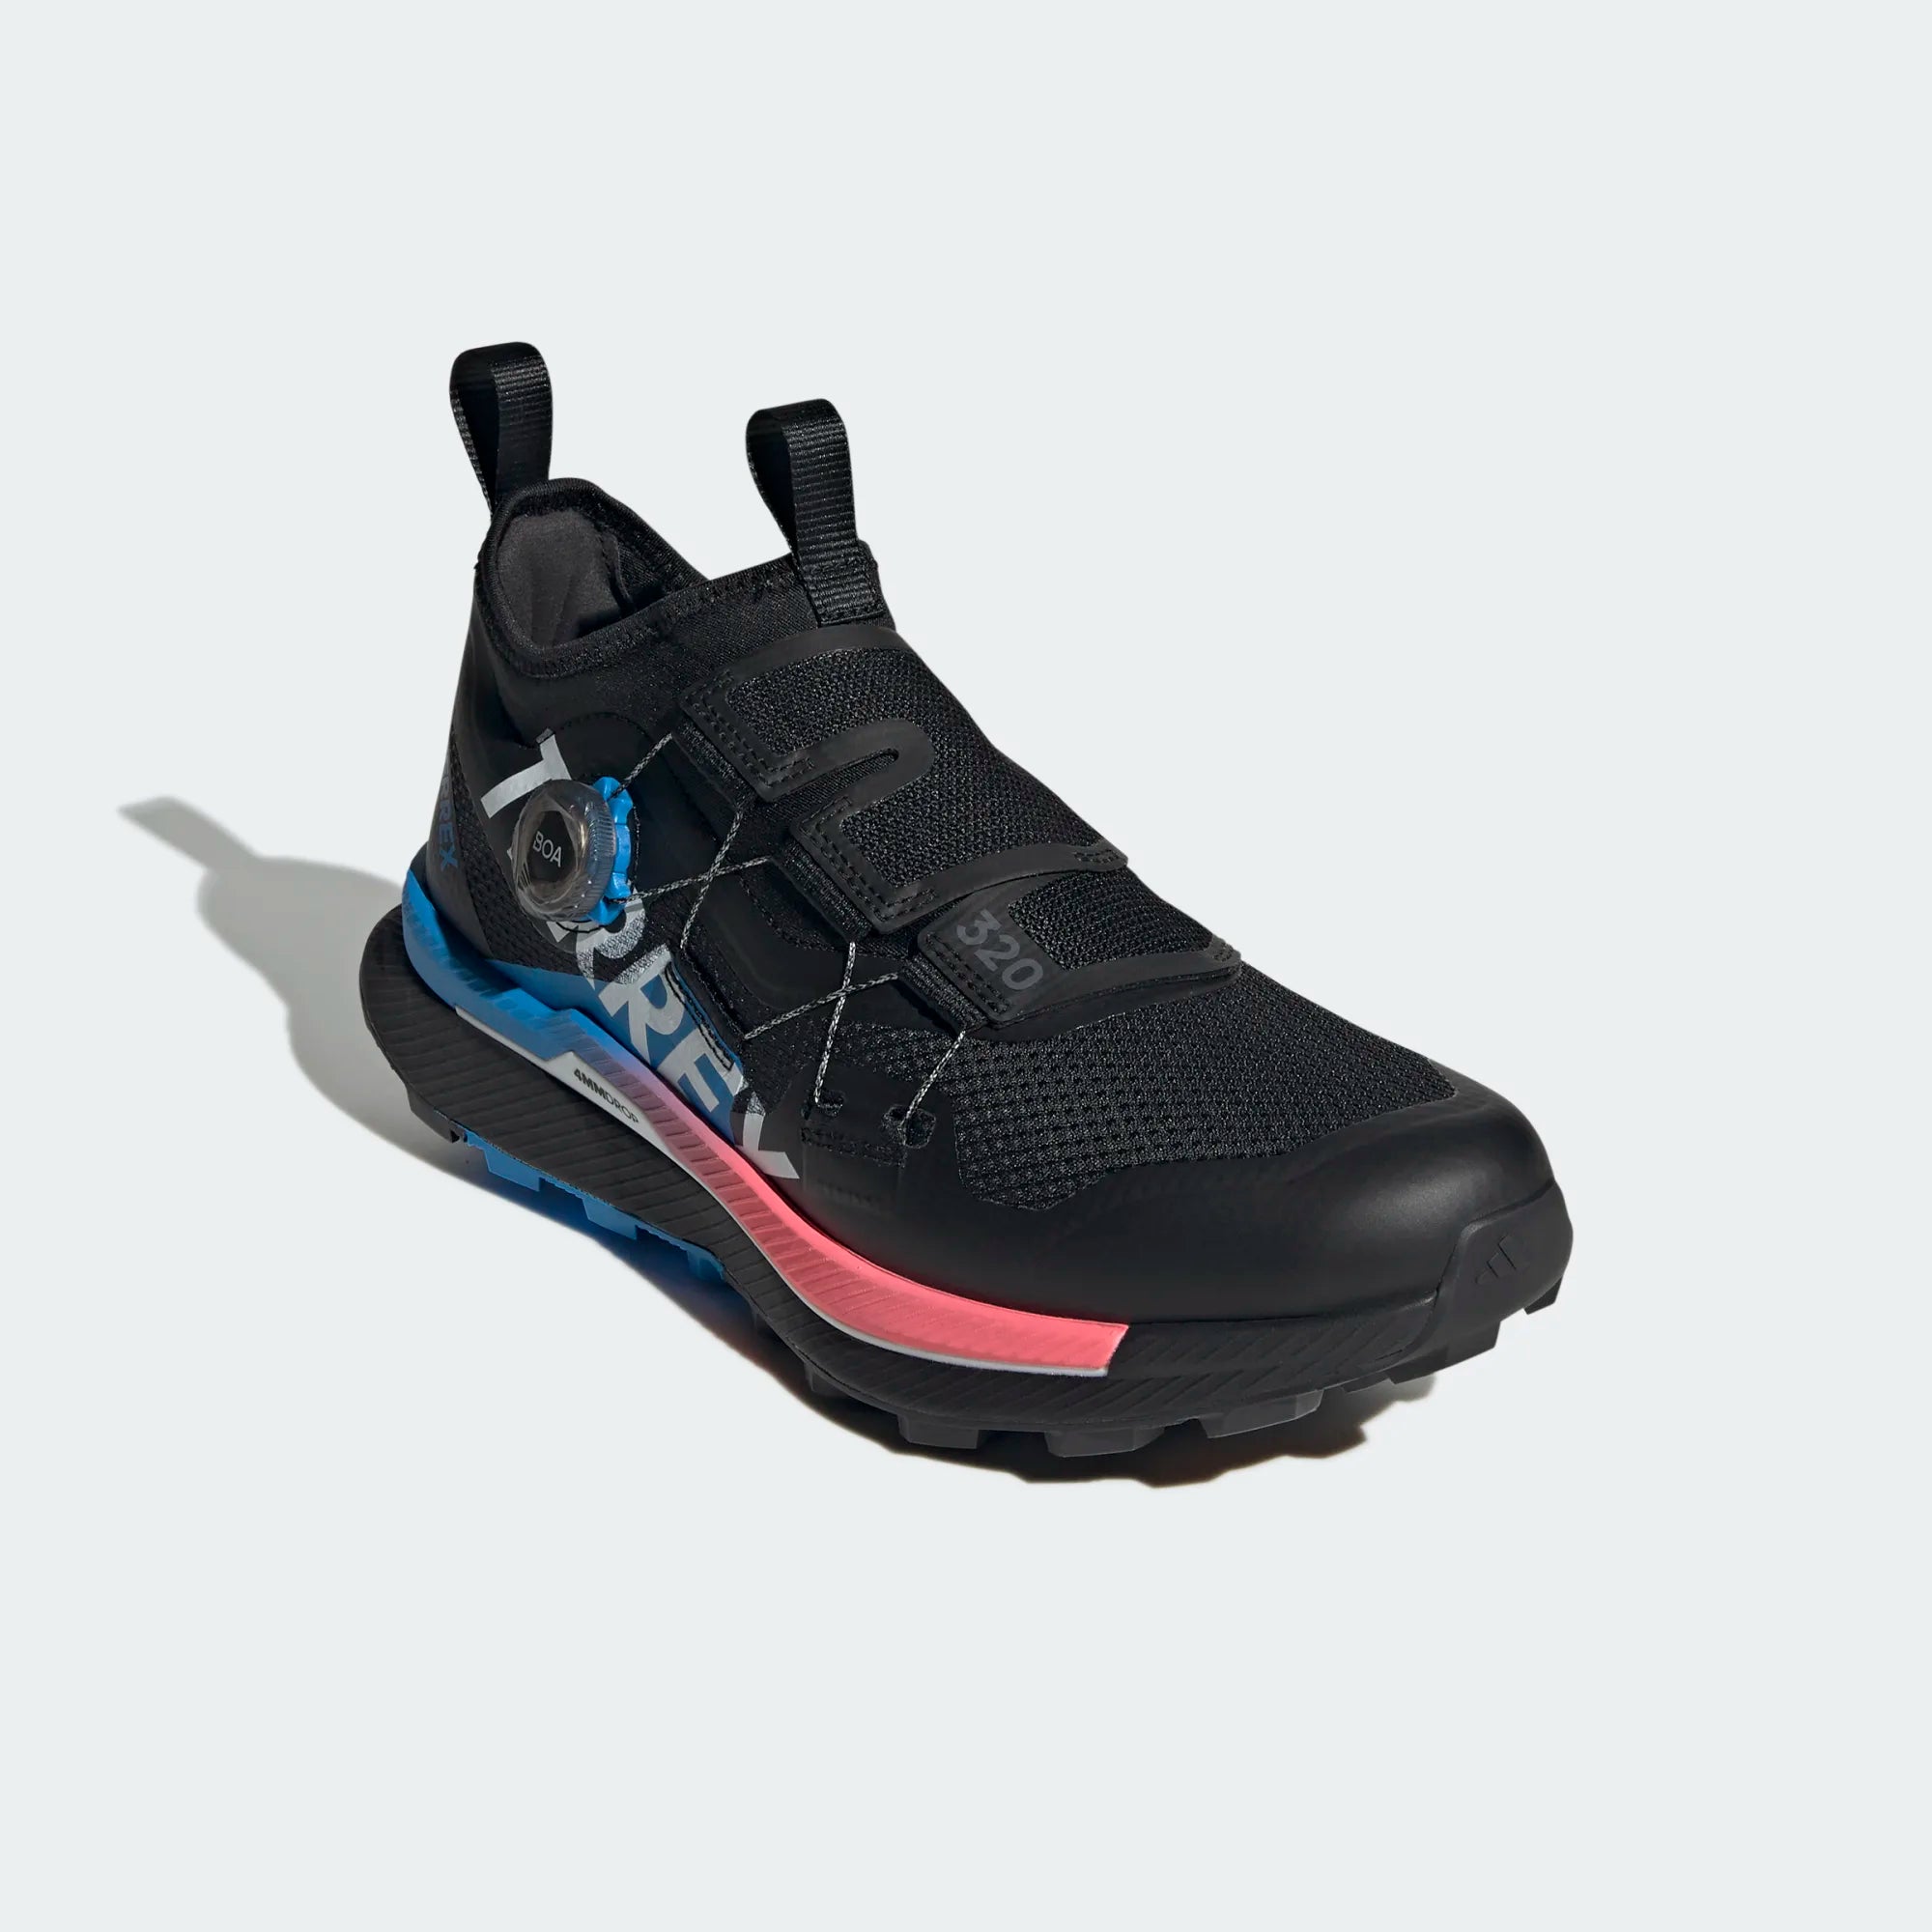 Gran universo Bajo mandato combate Men's adidas Terrex Agravic Pro - Trail Running Shoes